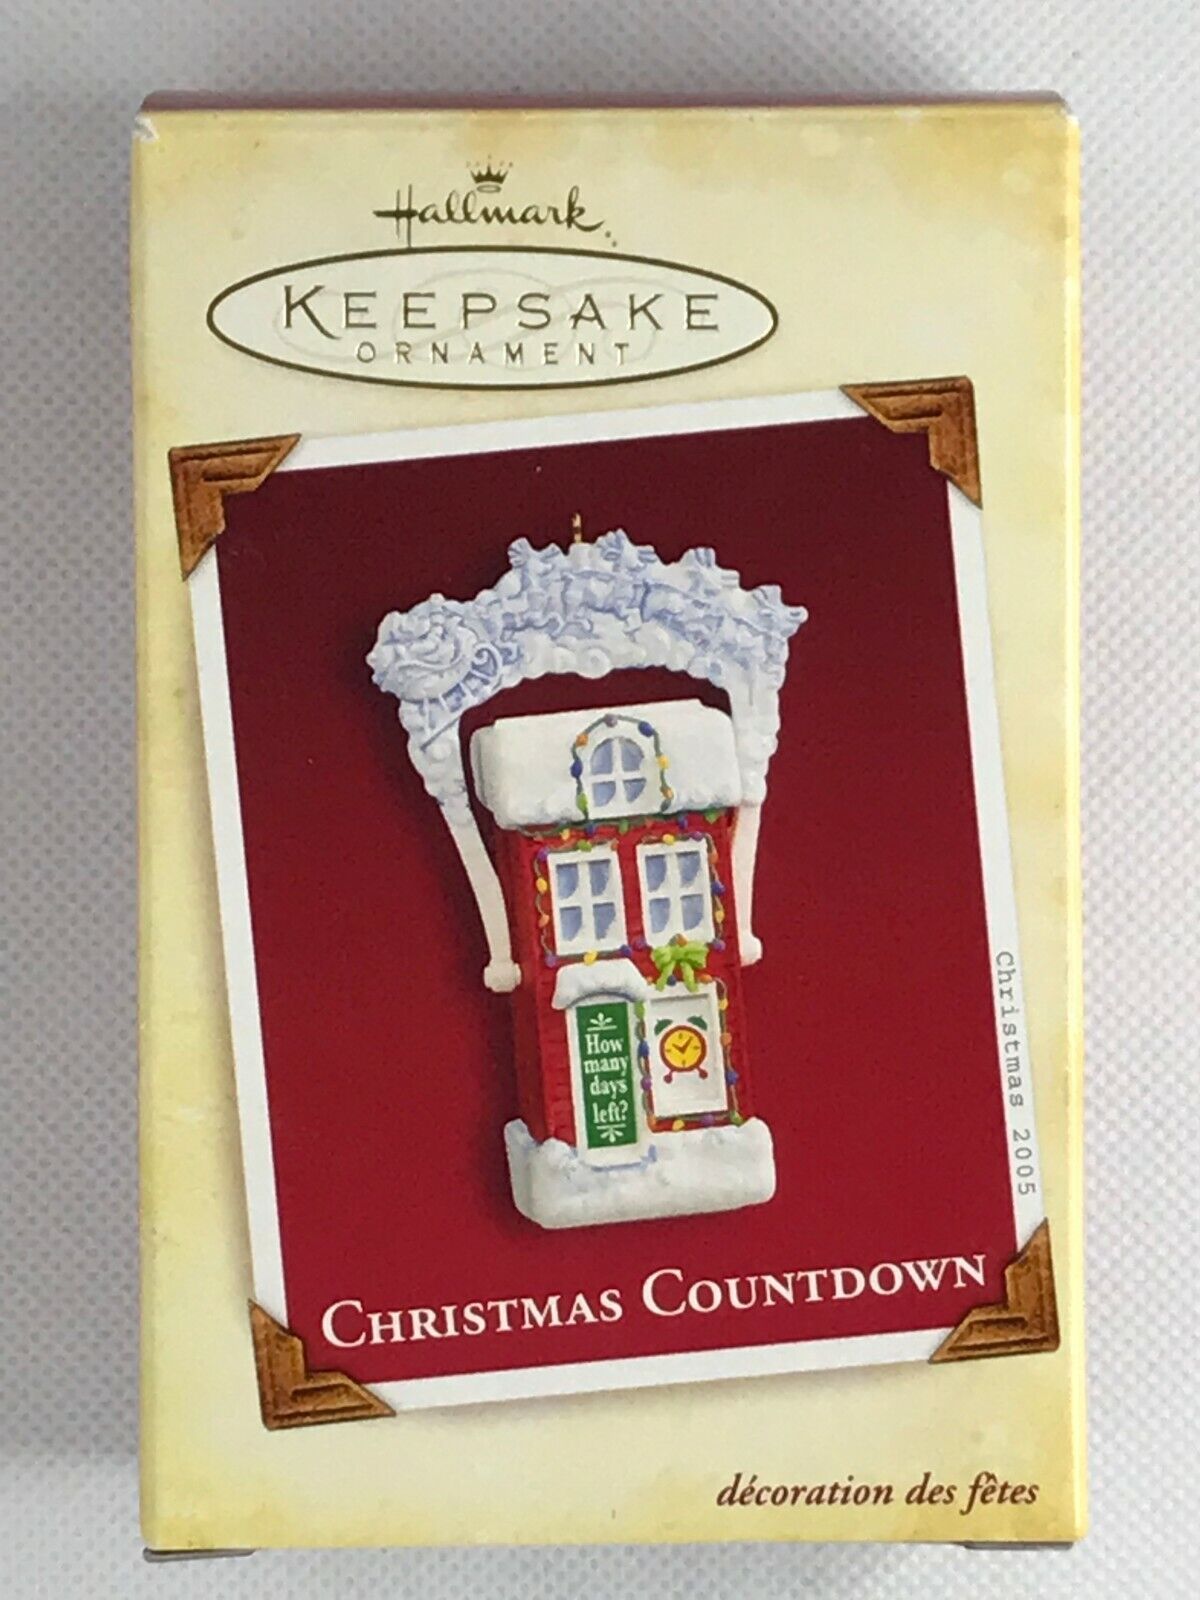 2005 Hallmark Keepsake Ornament Christmas Countdown .